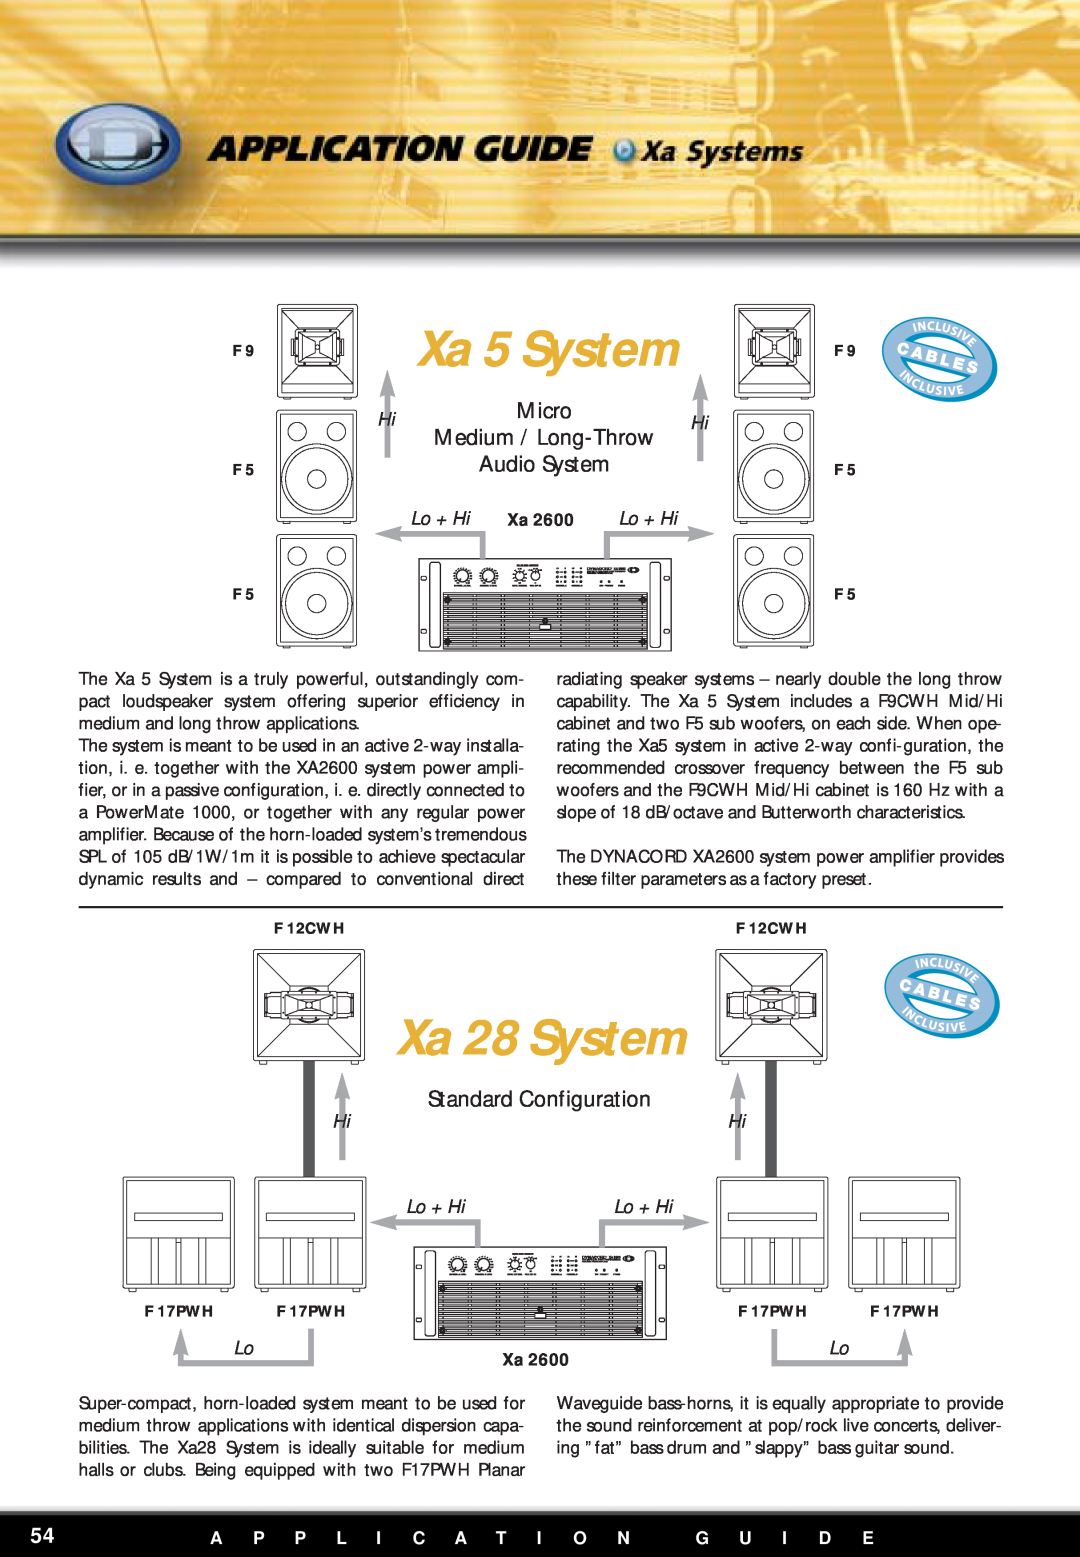 Dynacord F12 manual Xa 28 System, Micro, Medium / Long-Throw, Standard Configuration, Audio System, Lo + Hi, G U I D E 